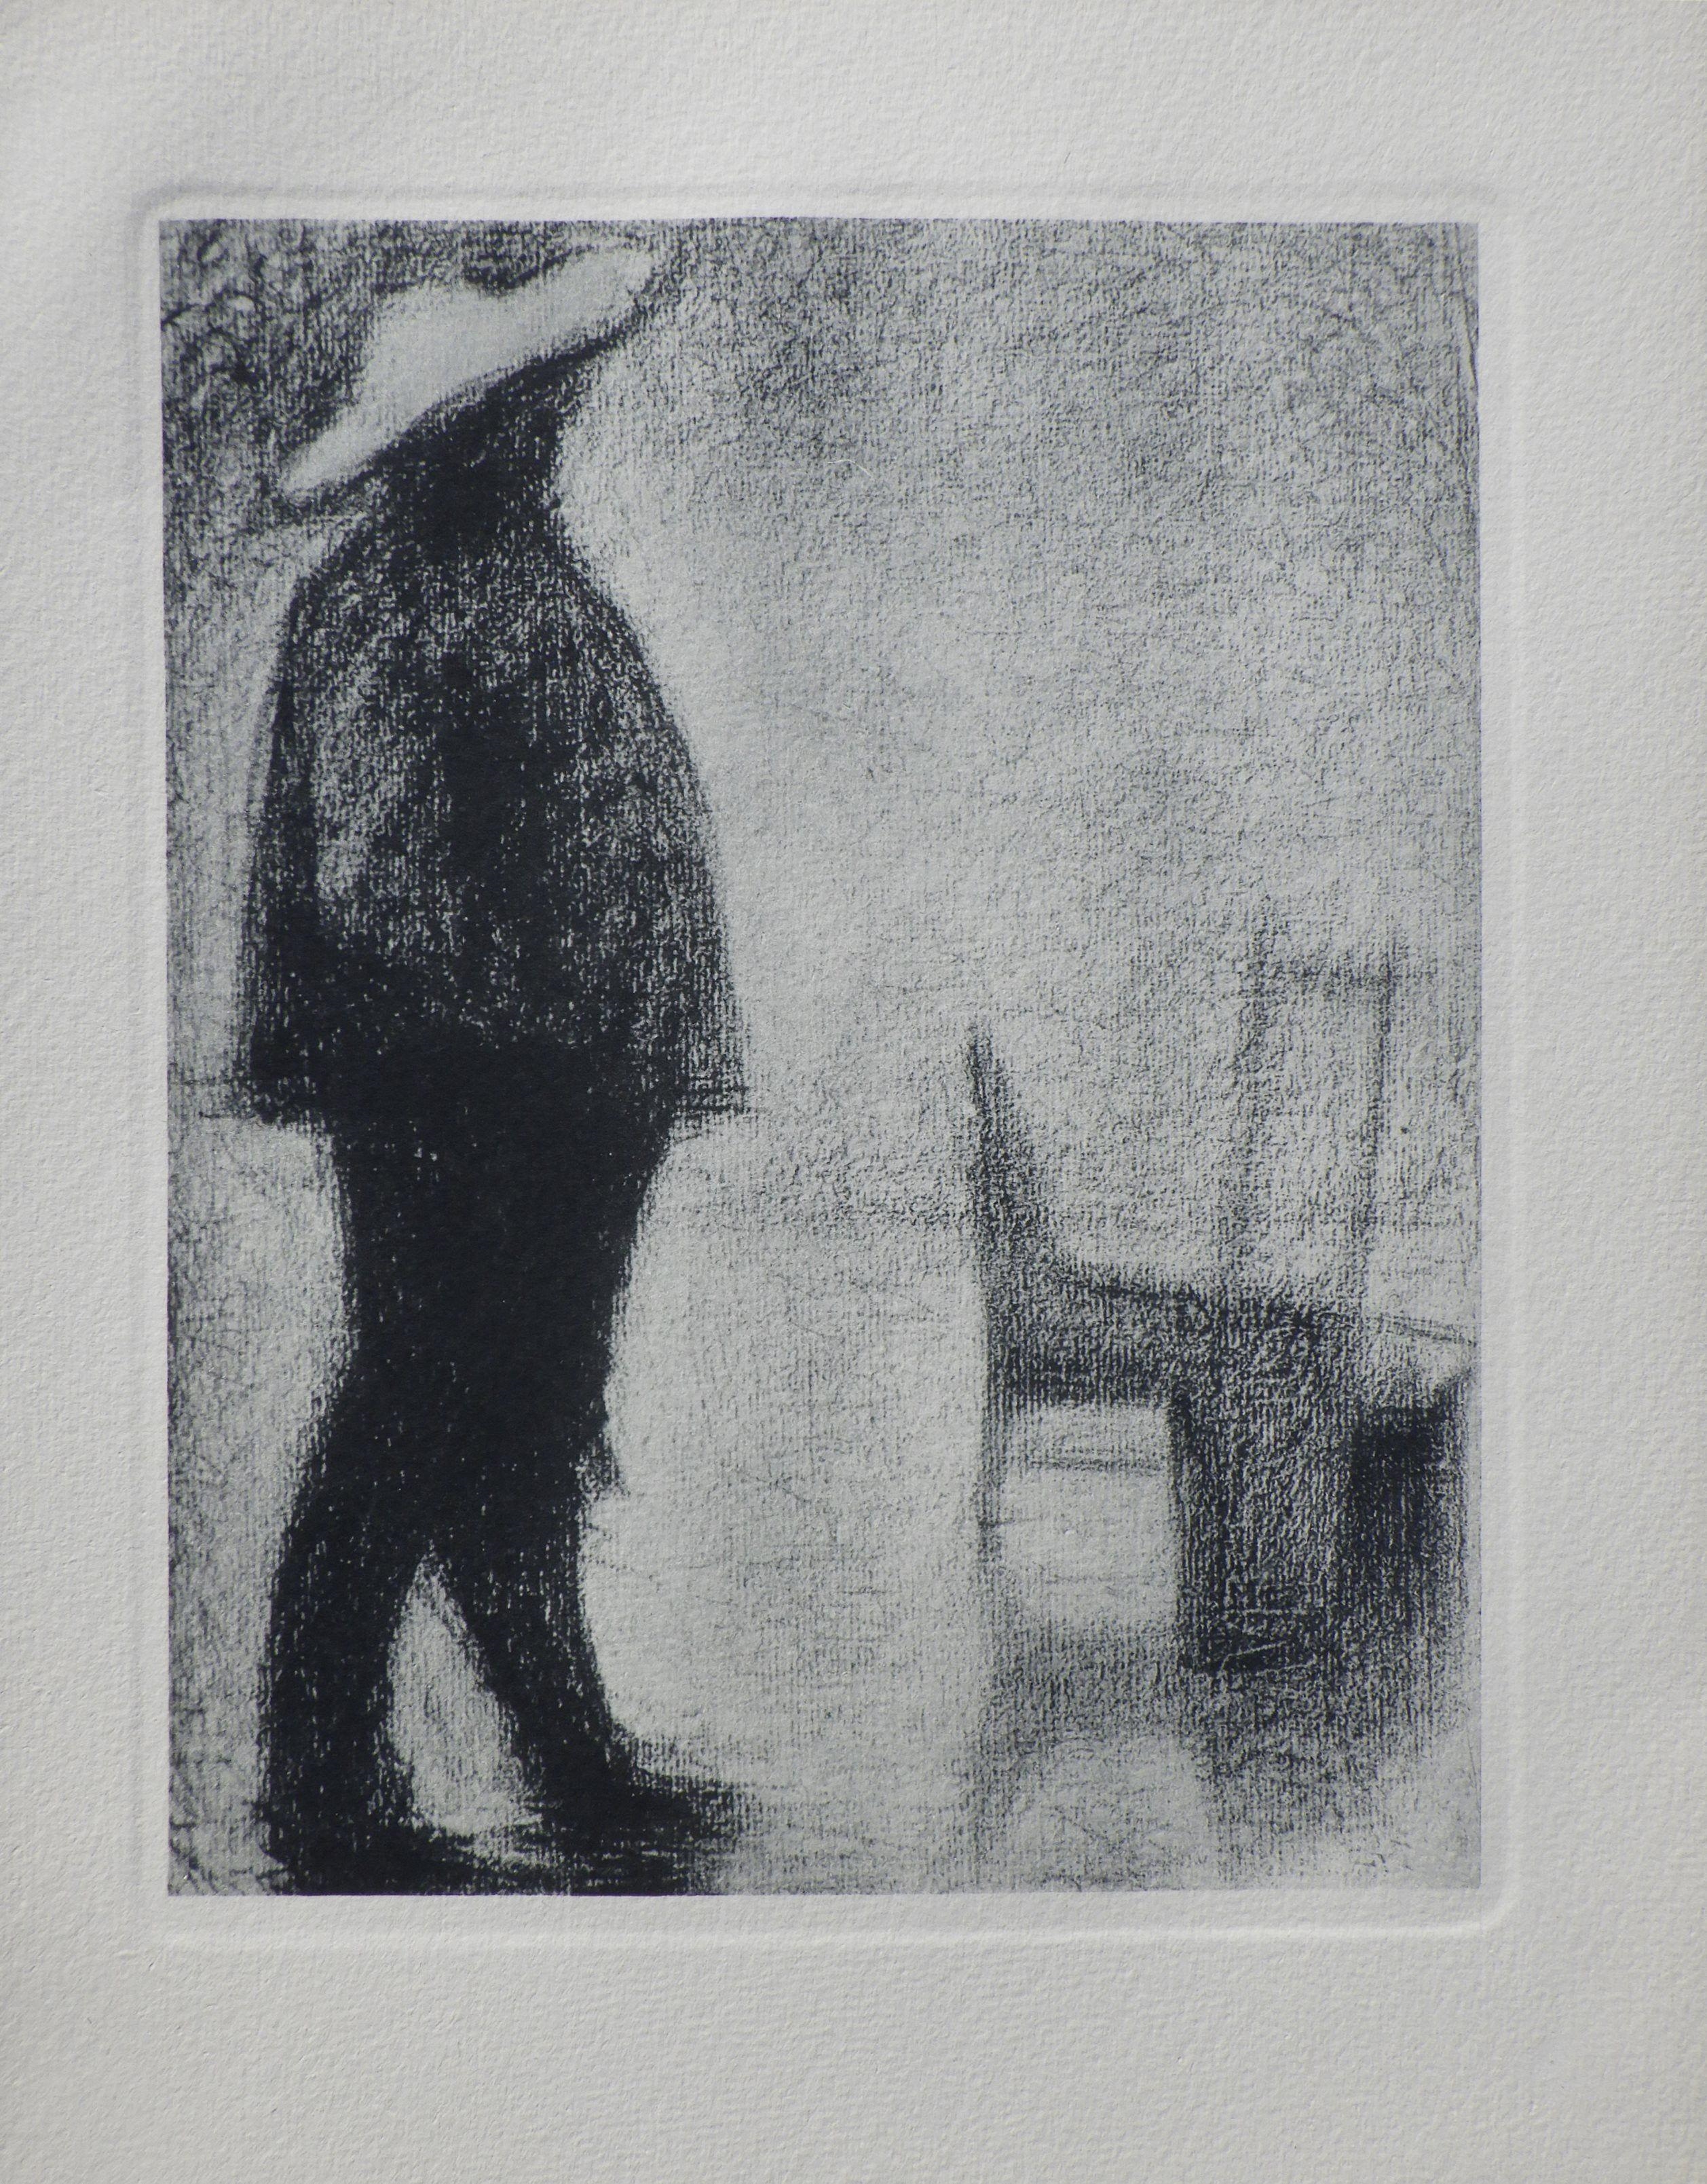 FORT DE LA HALL by Georges Seurat, 1948